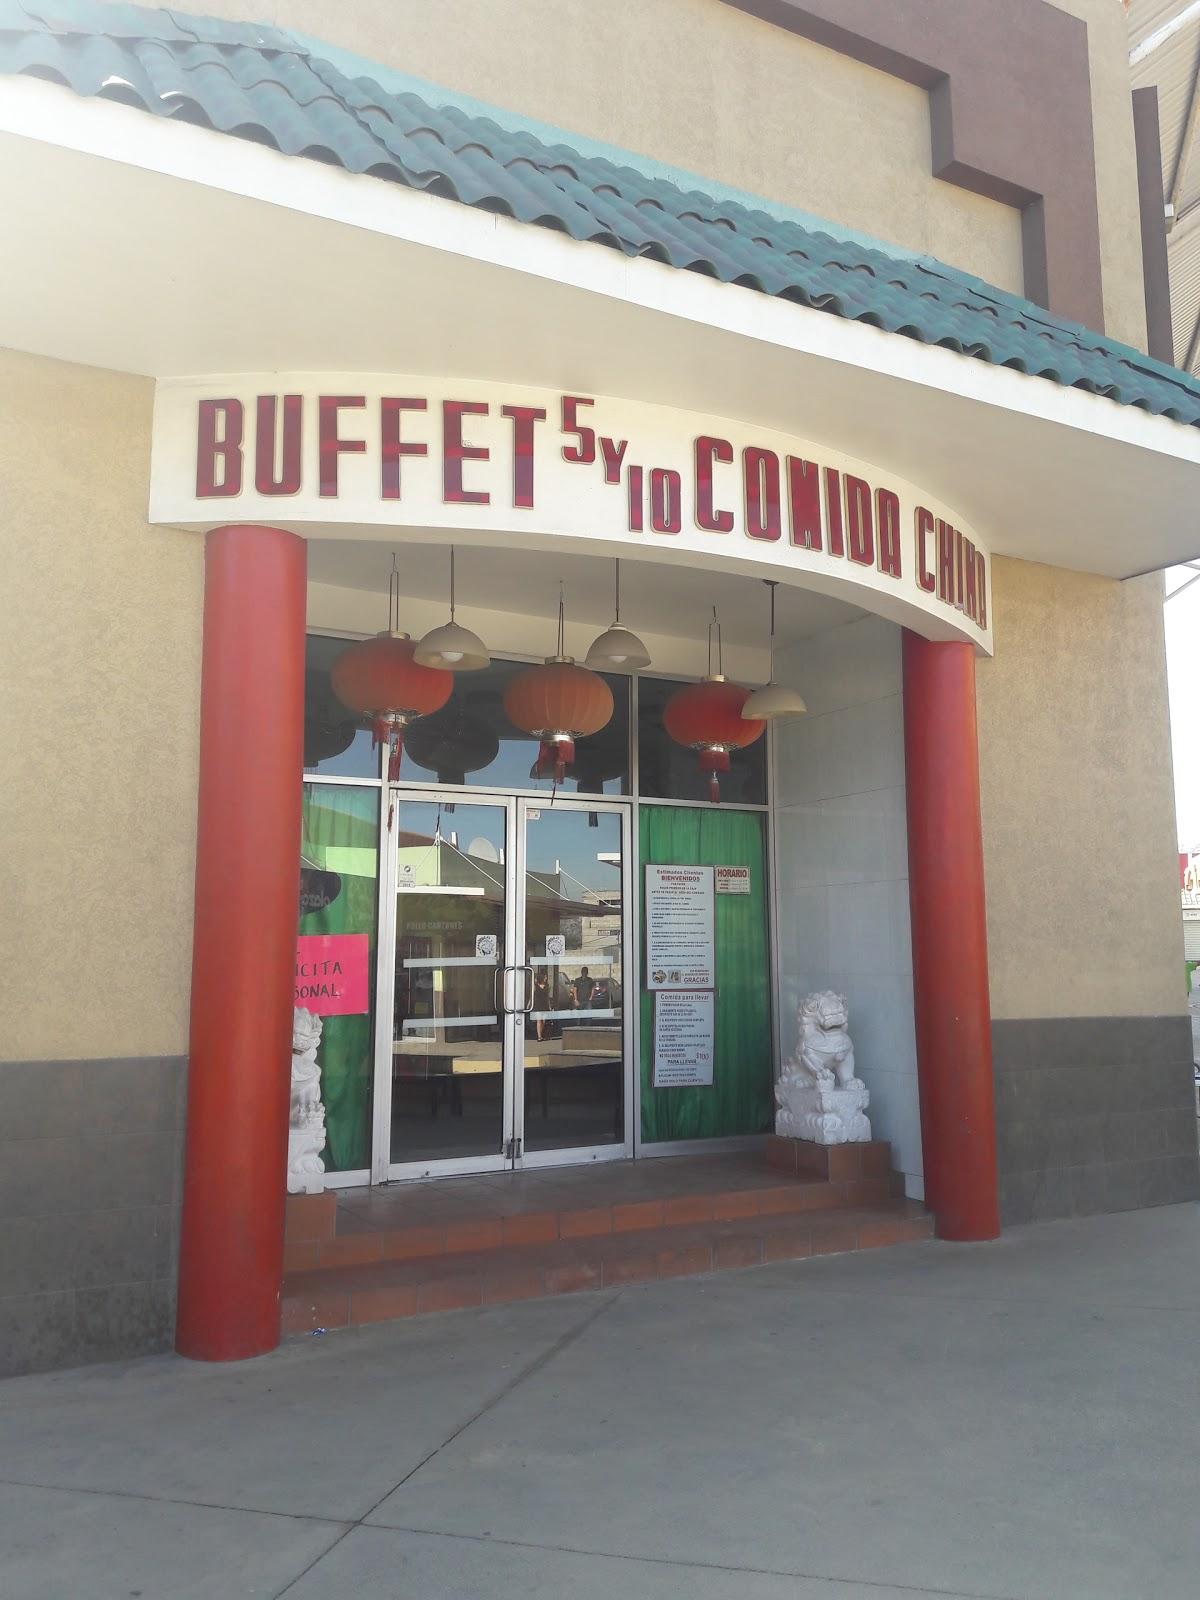 BUFFET 5 y 10 COMIDA CHINA restaurant, Tijuana - Restaurant reviews